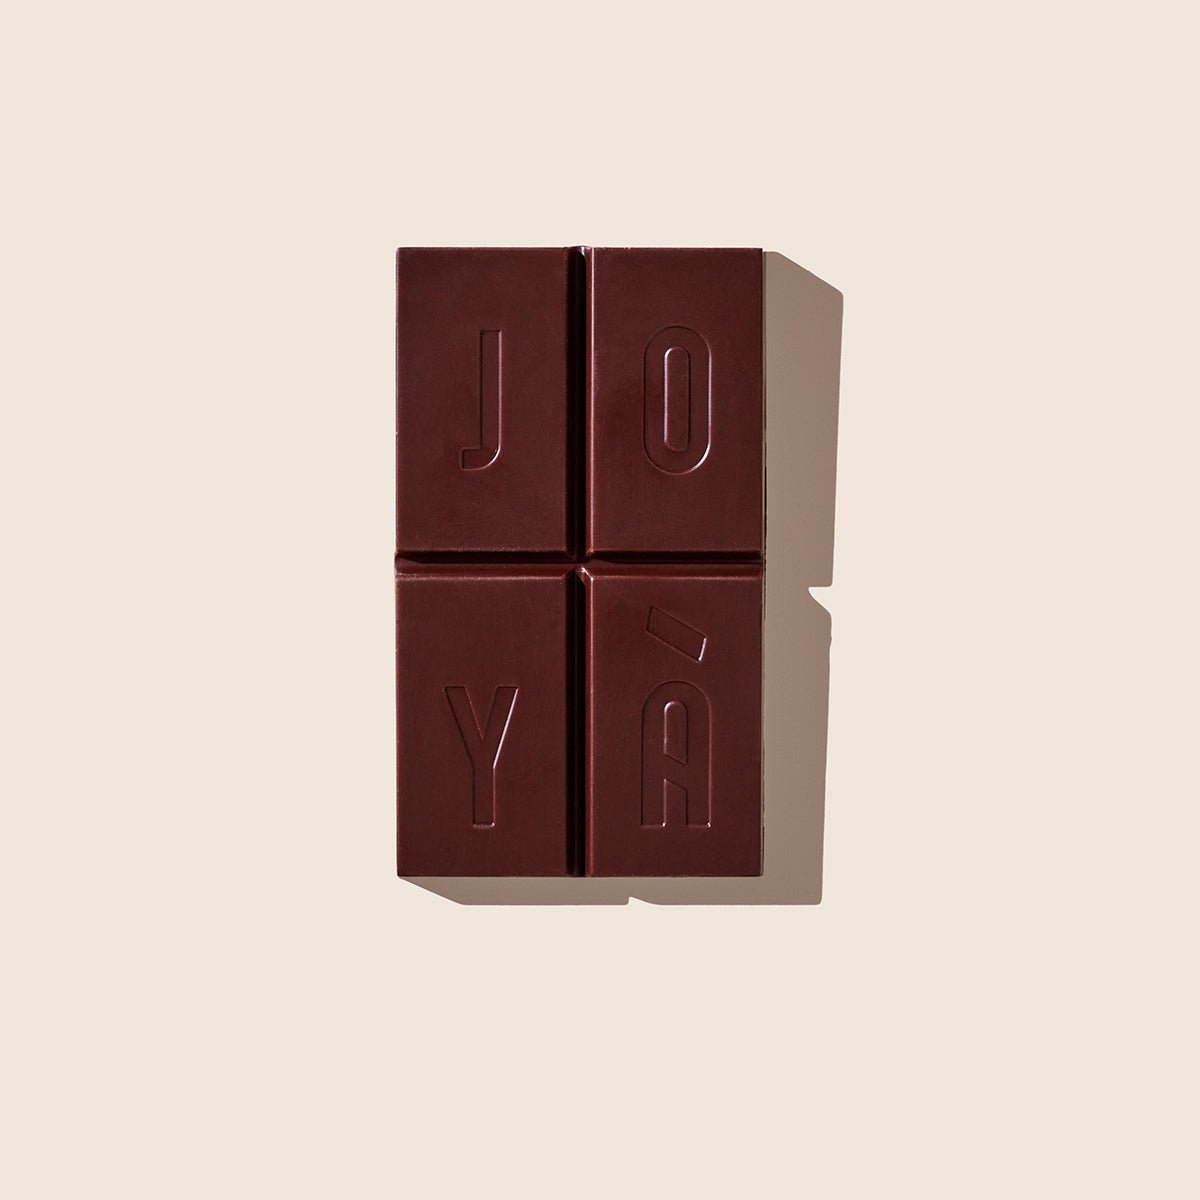 JOYÀ Balance Functional Chocolate (6-pack) - Multiverse